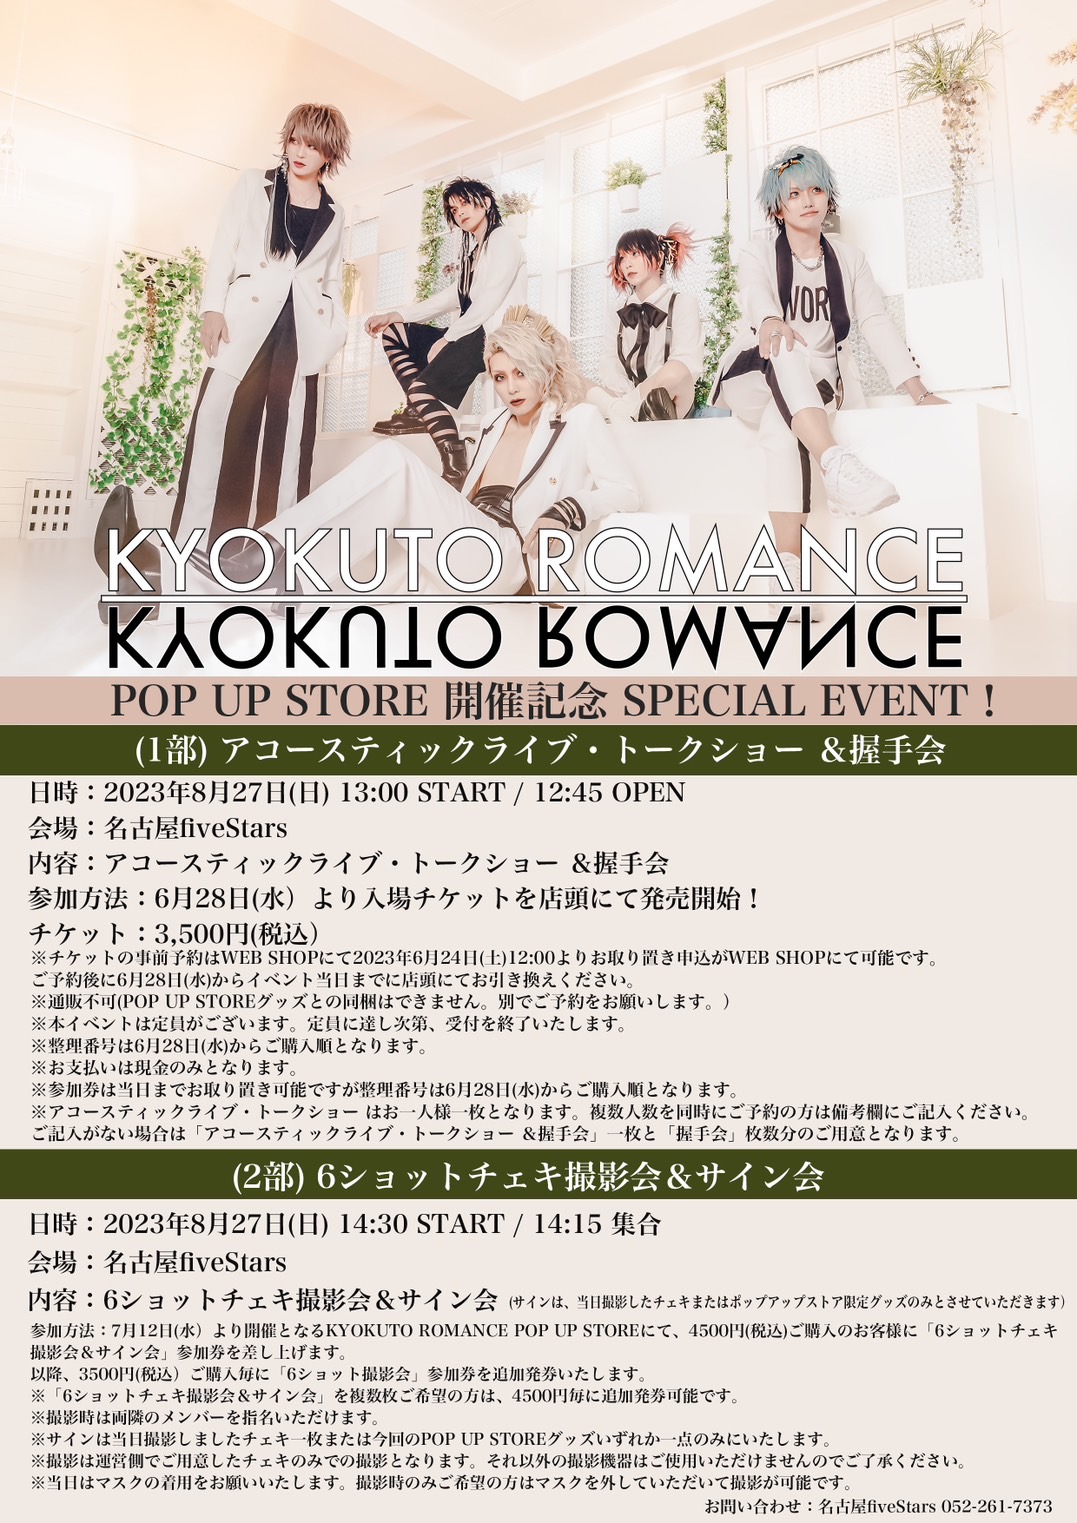 KYOKUTO ROMANCE × fiveStars POP UP STORE 開催記念 SPECIAL EVENT ※ 情報追記 (6/24更新)